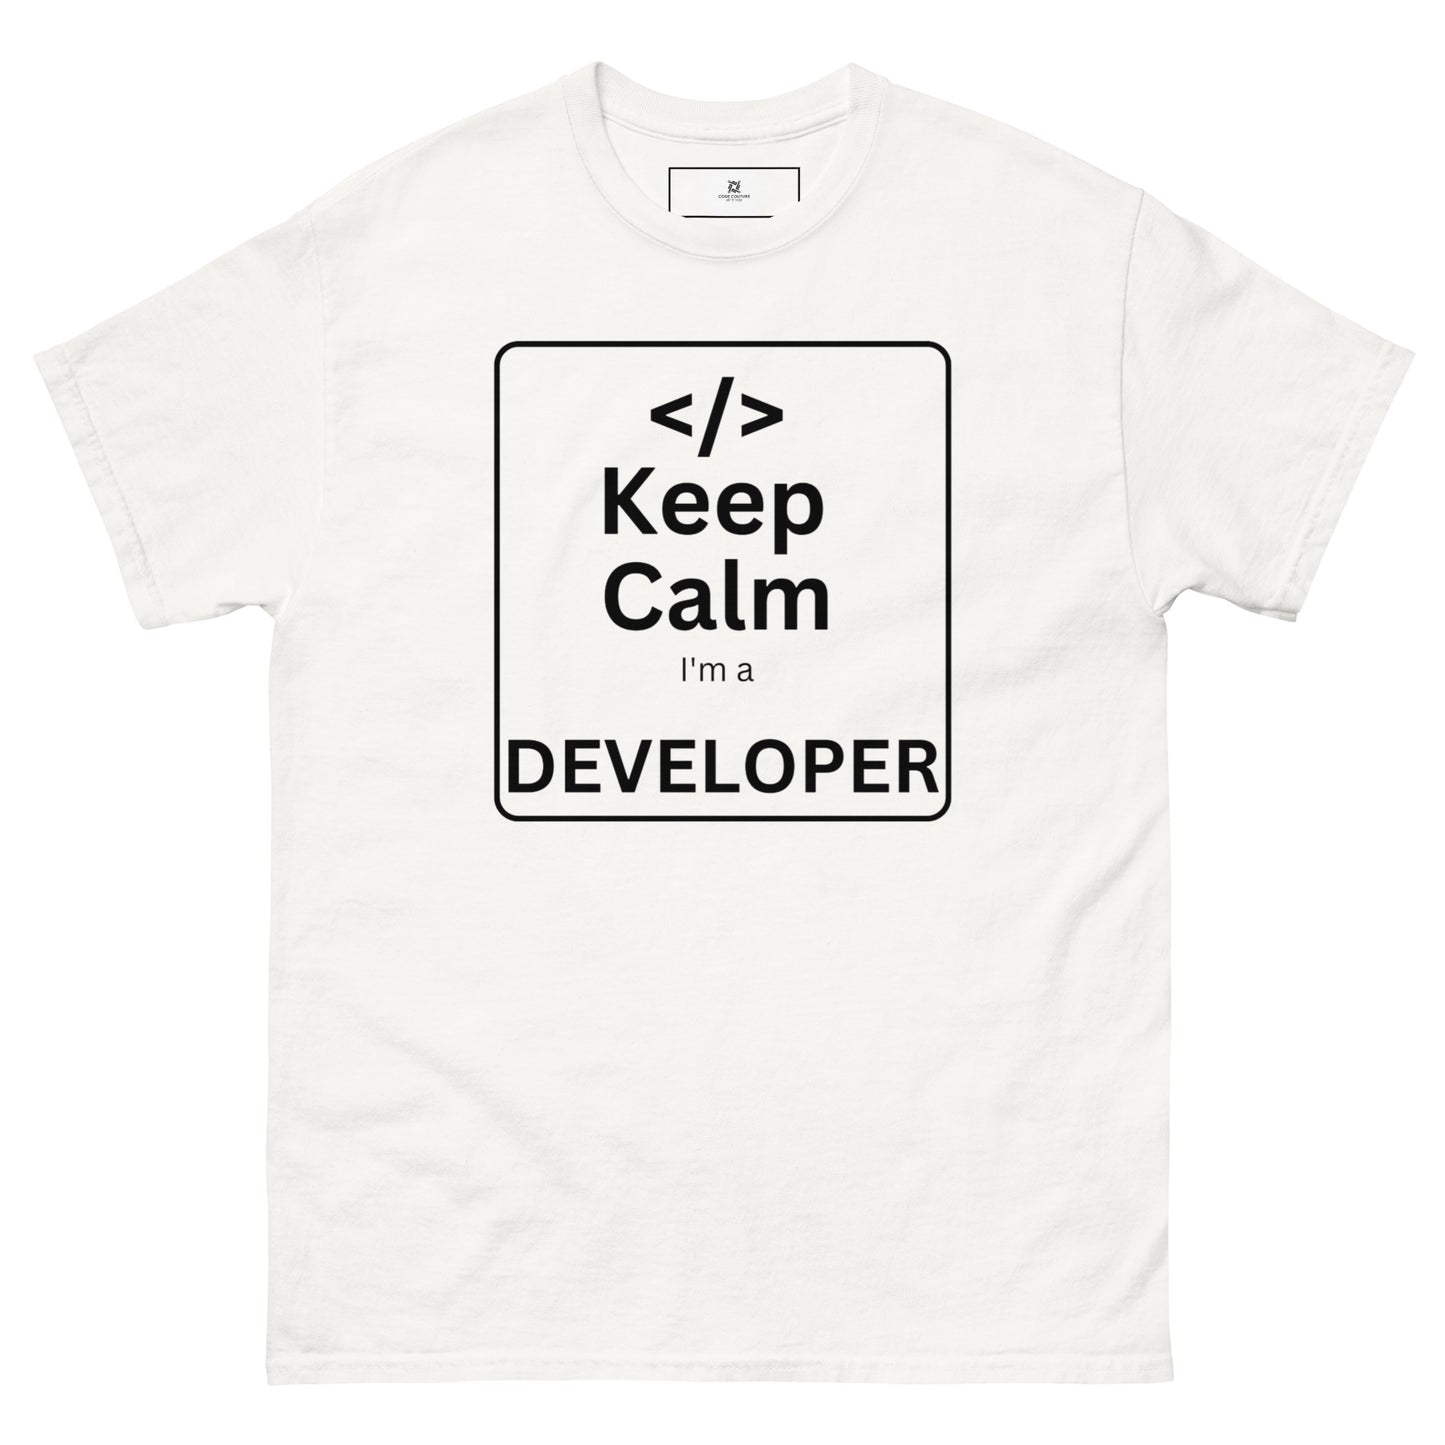 Developer - Keep Calm